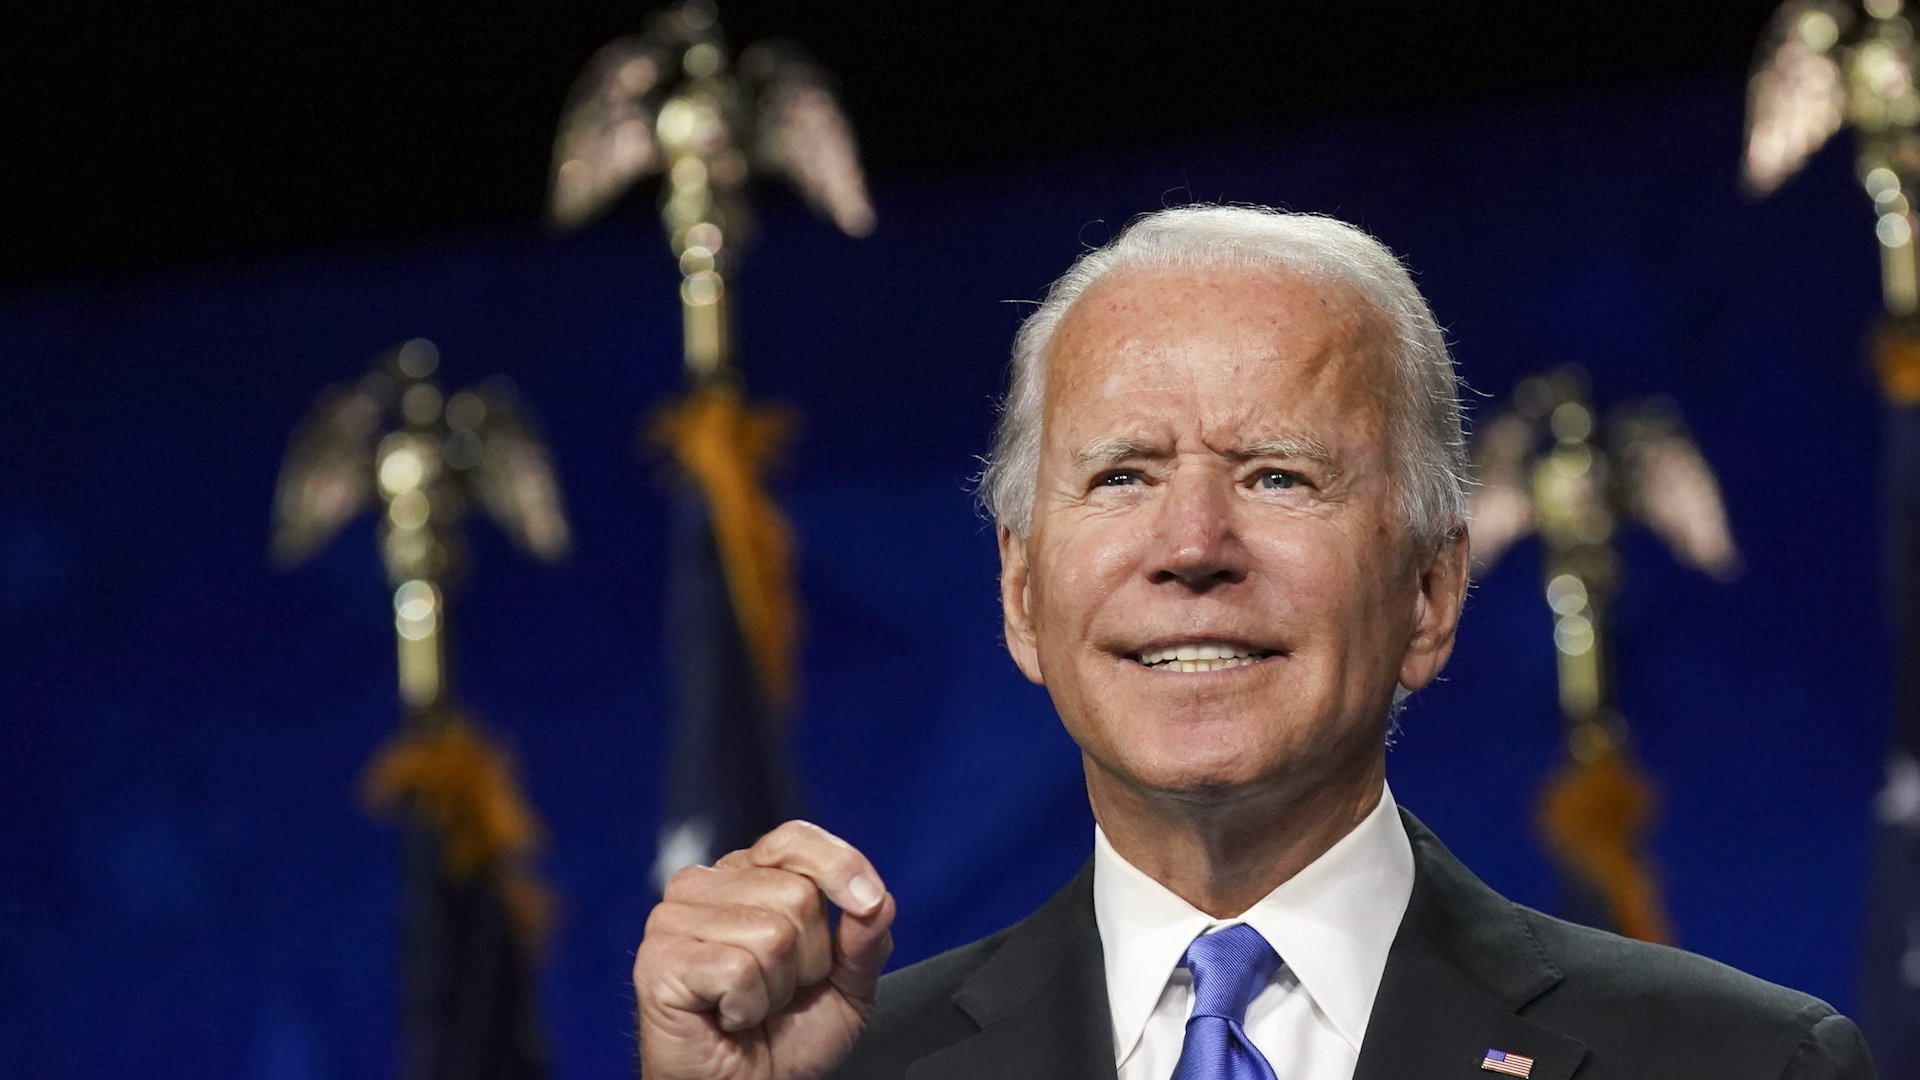 Highlights: Joe Biden Promises Progress During Final Night of DNC